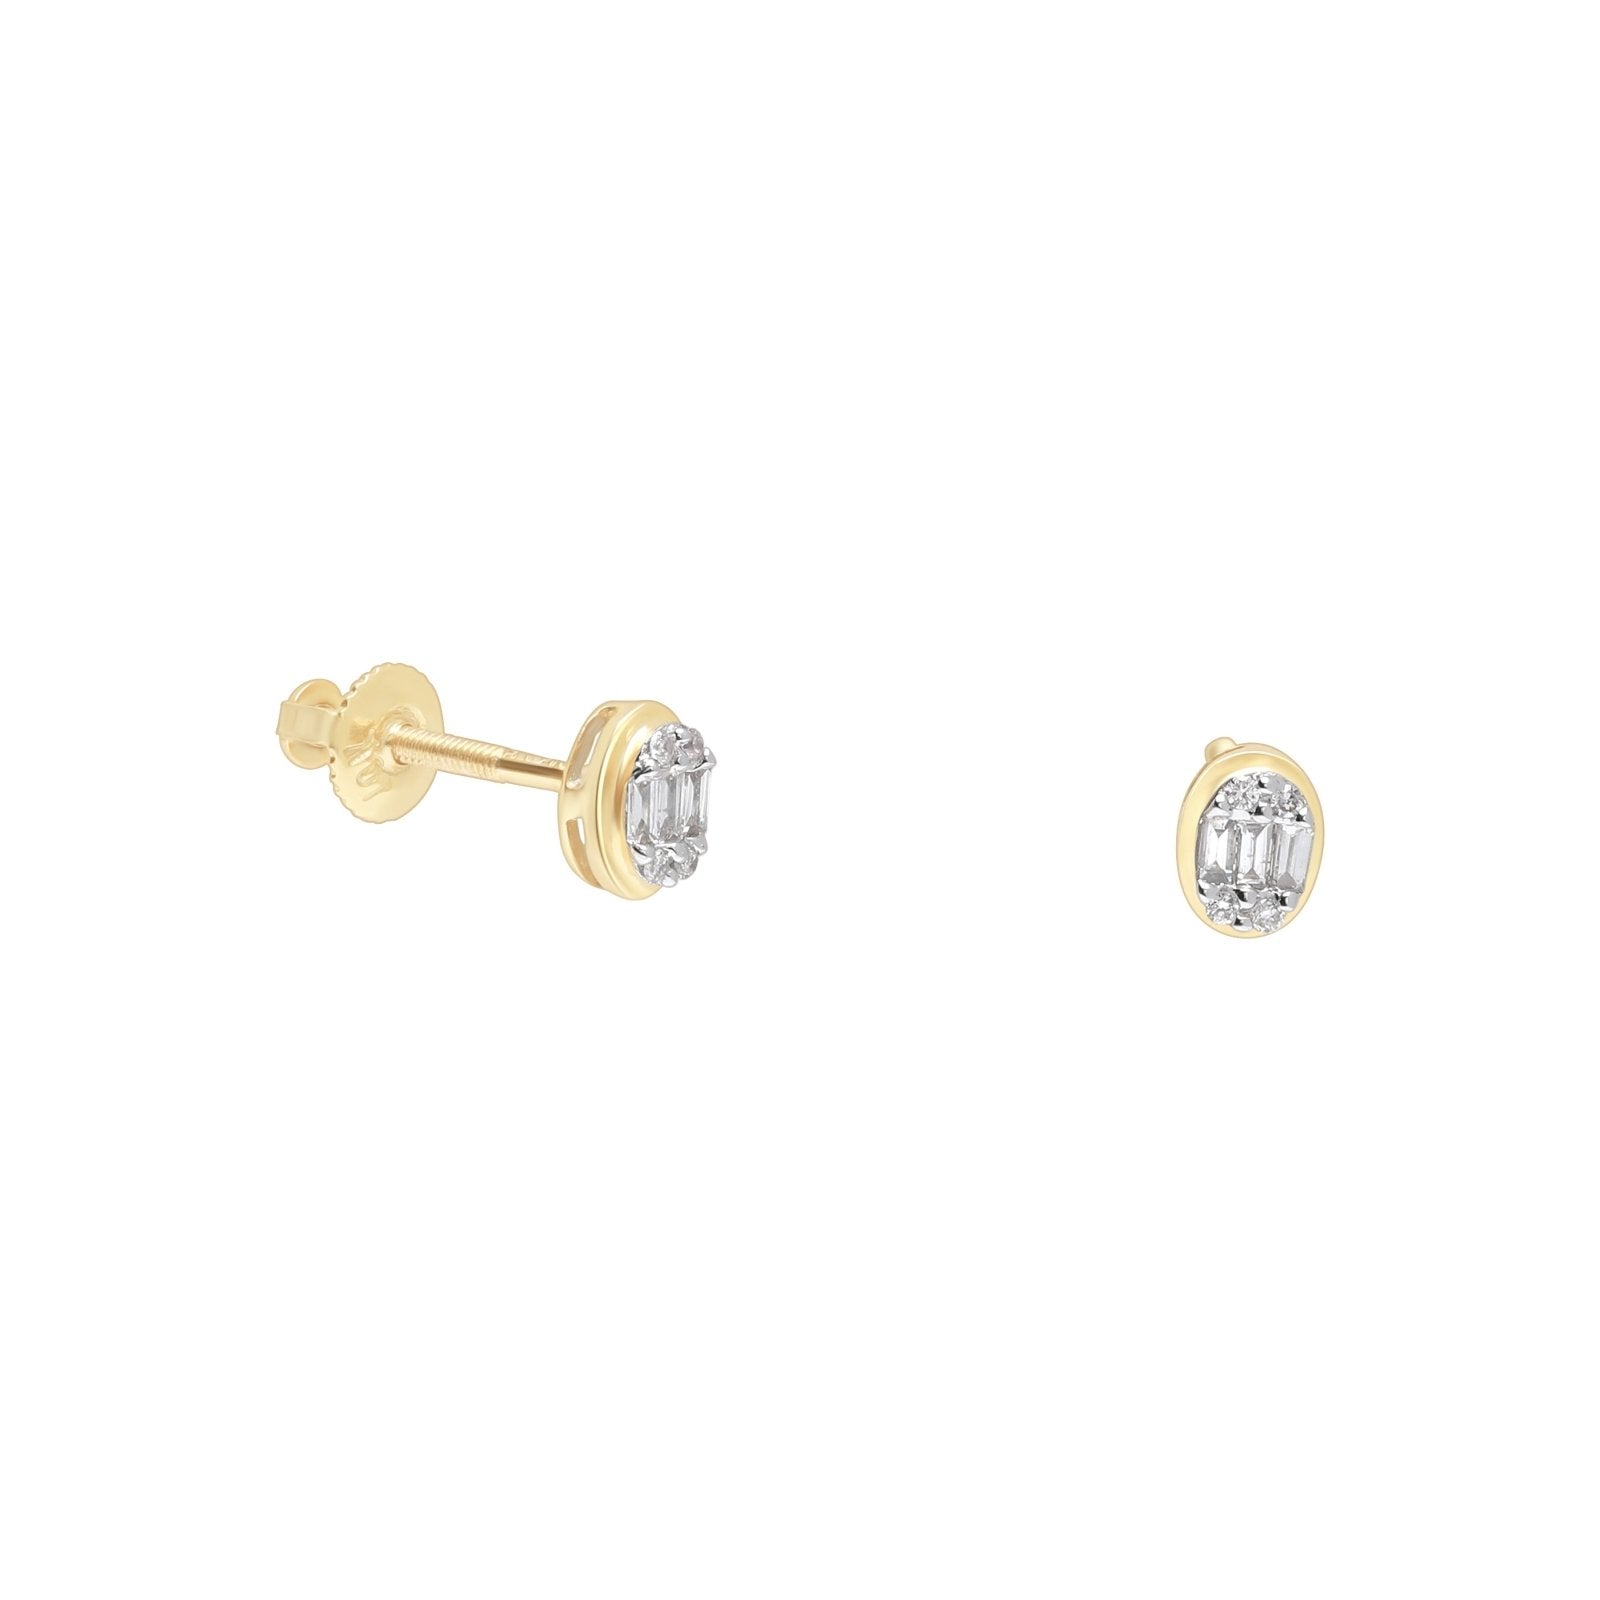 Oval Mixed Diamond Screw Back Earrings Earrings Estella Collection #product_description# 17793 14k Birthstone Birthstone Earrings #tag4# #tag5# #tag6# #tag7# #tag8# #tag9# #tag10#